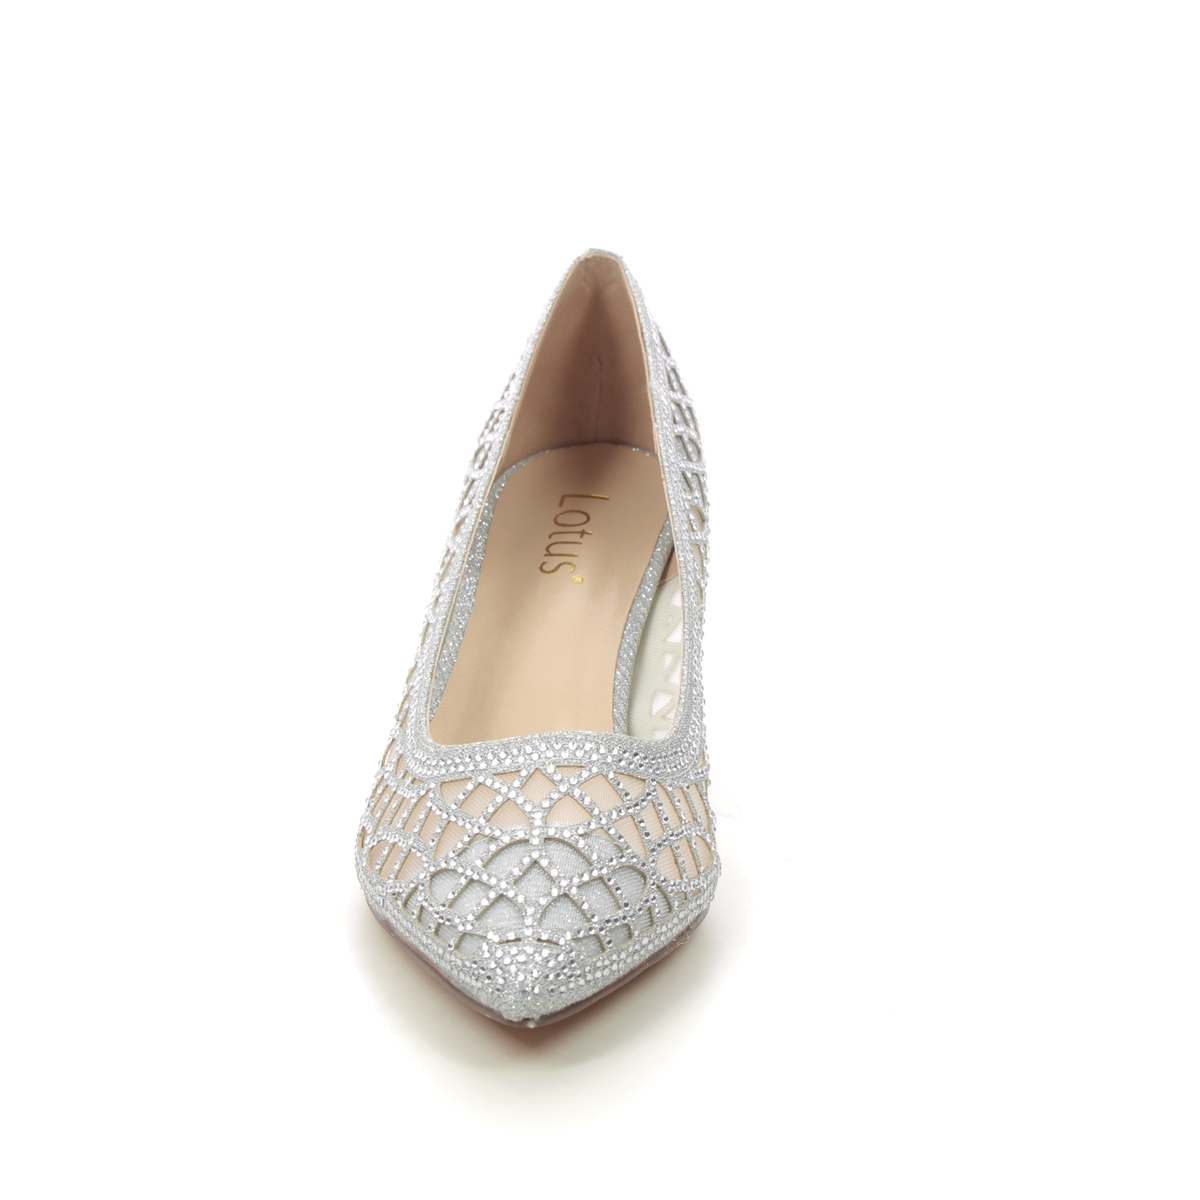 Buy the silver Lotus ladies' Panache court shoes online